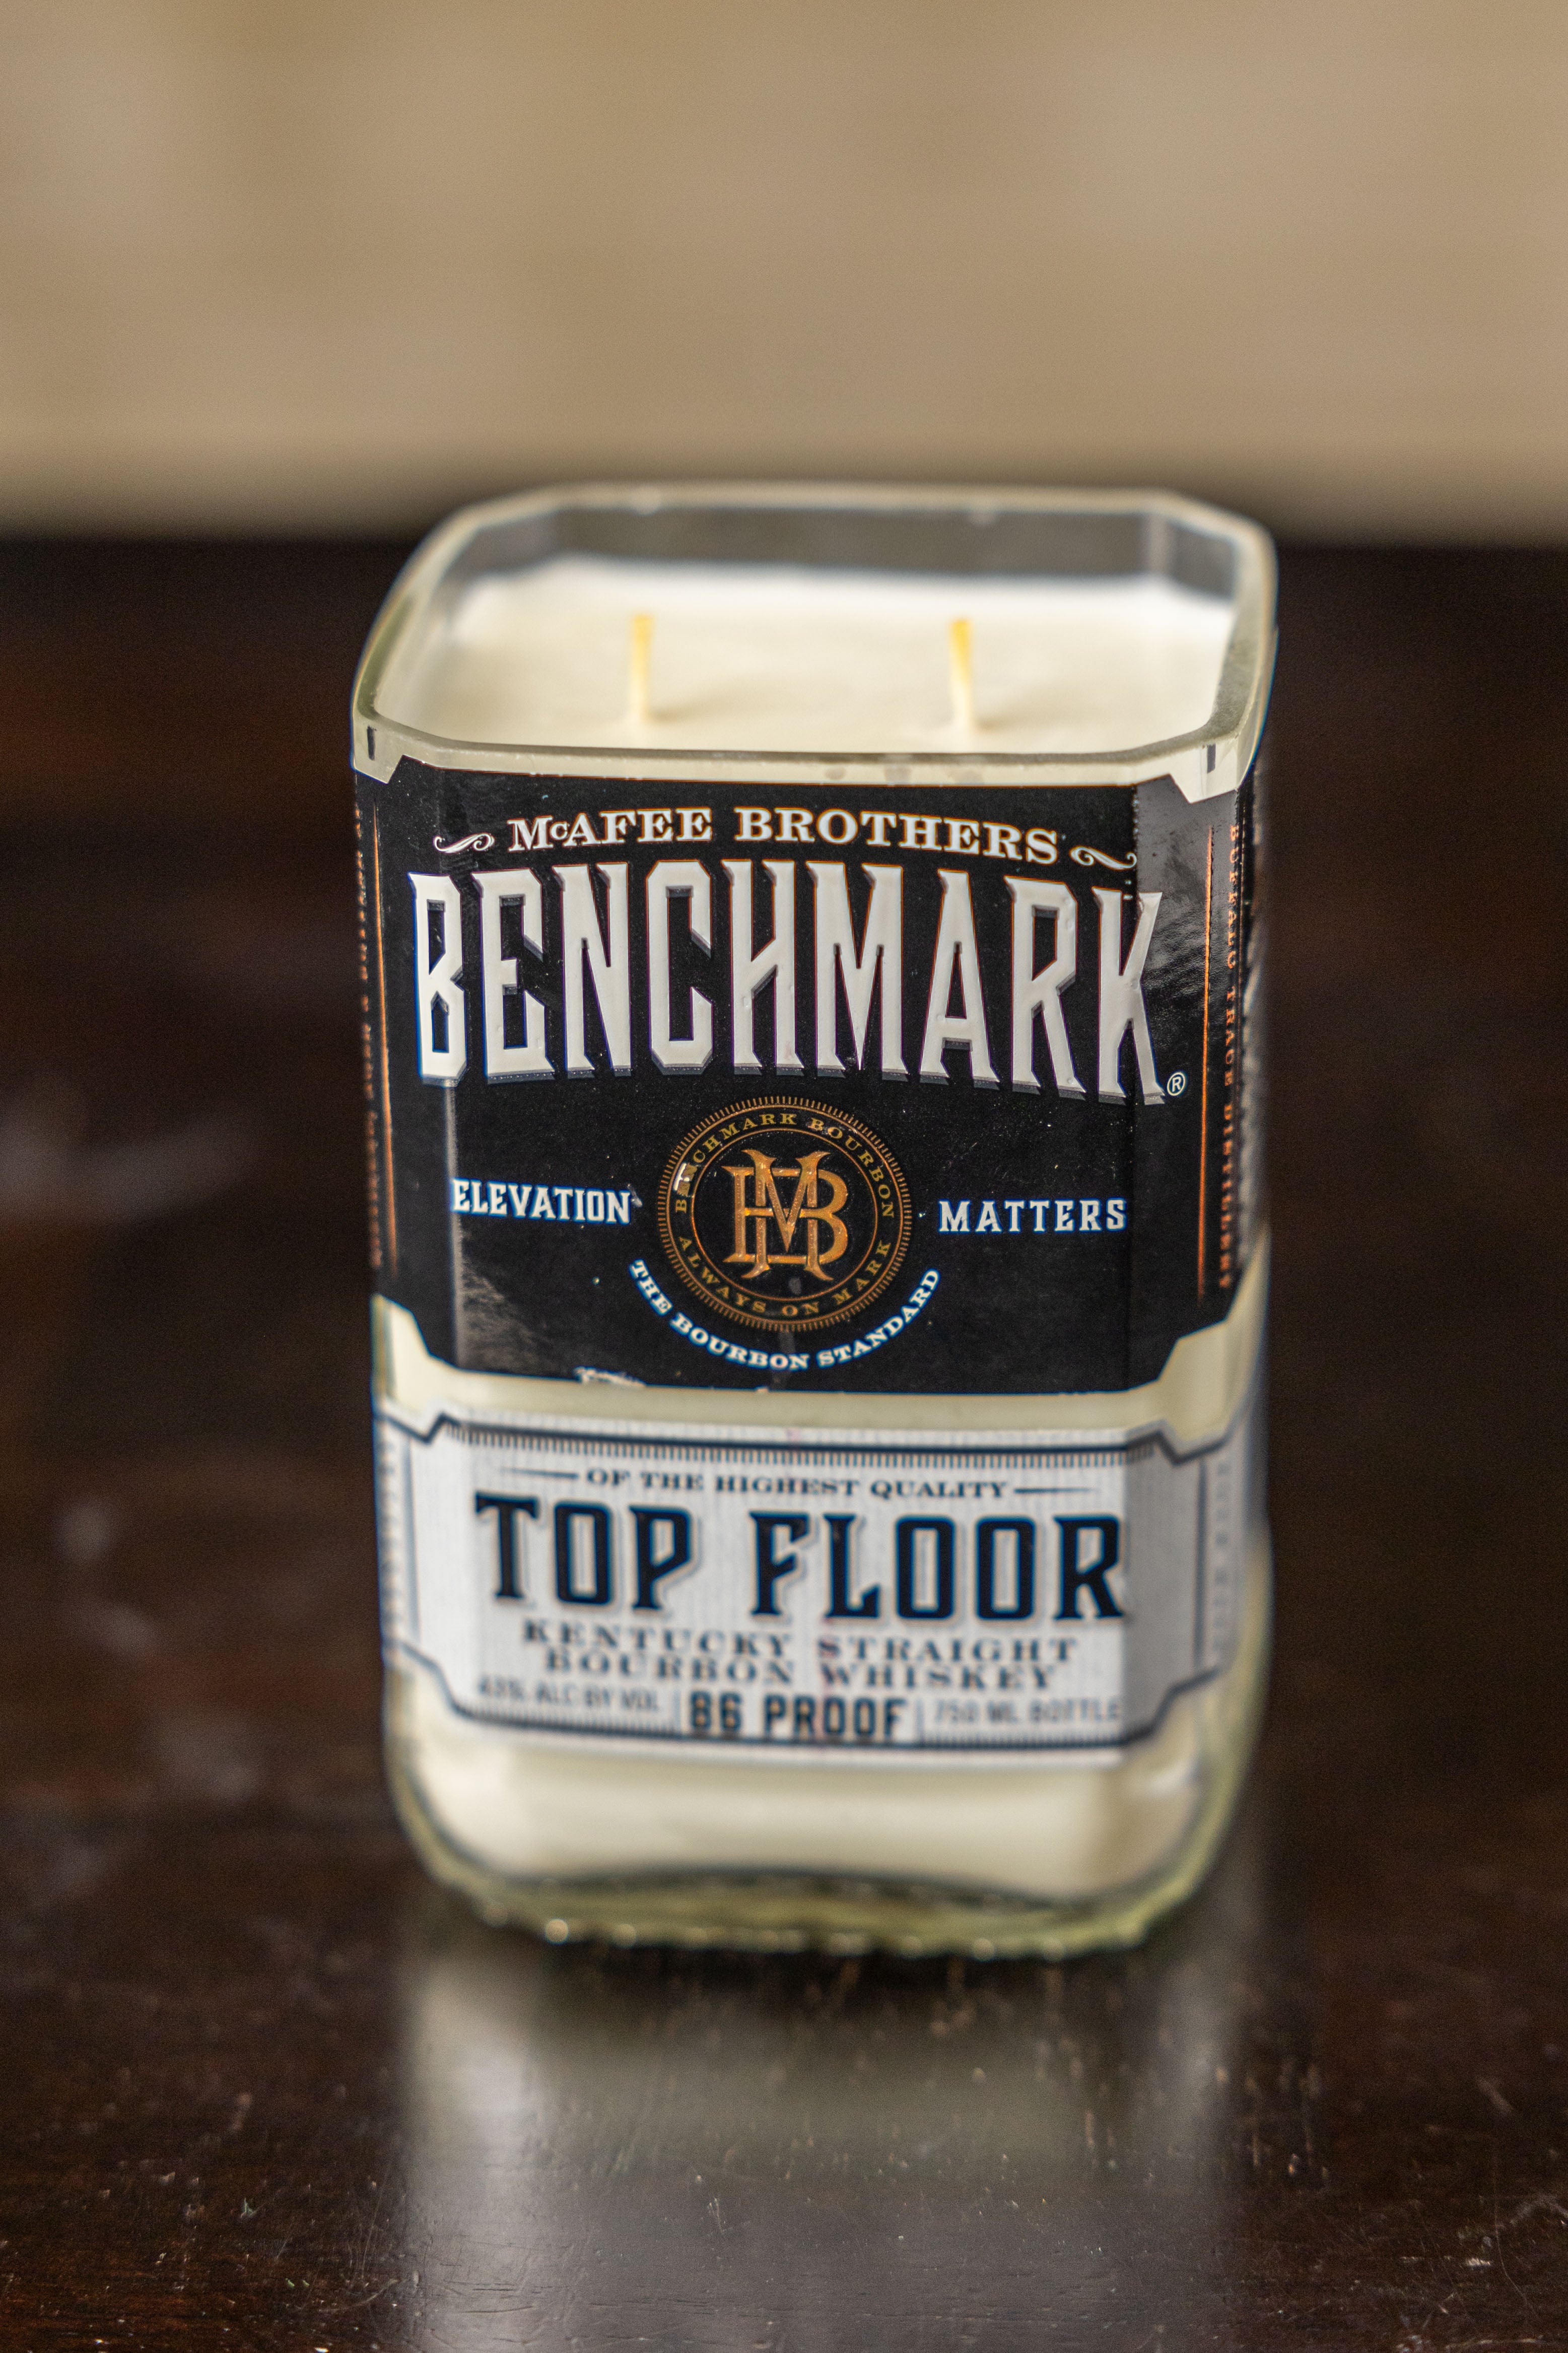 Benchmark Top Floor Bottle Candle